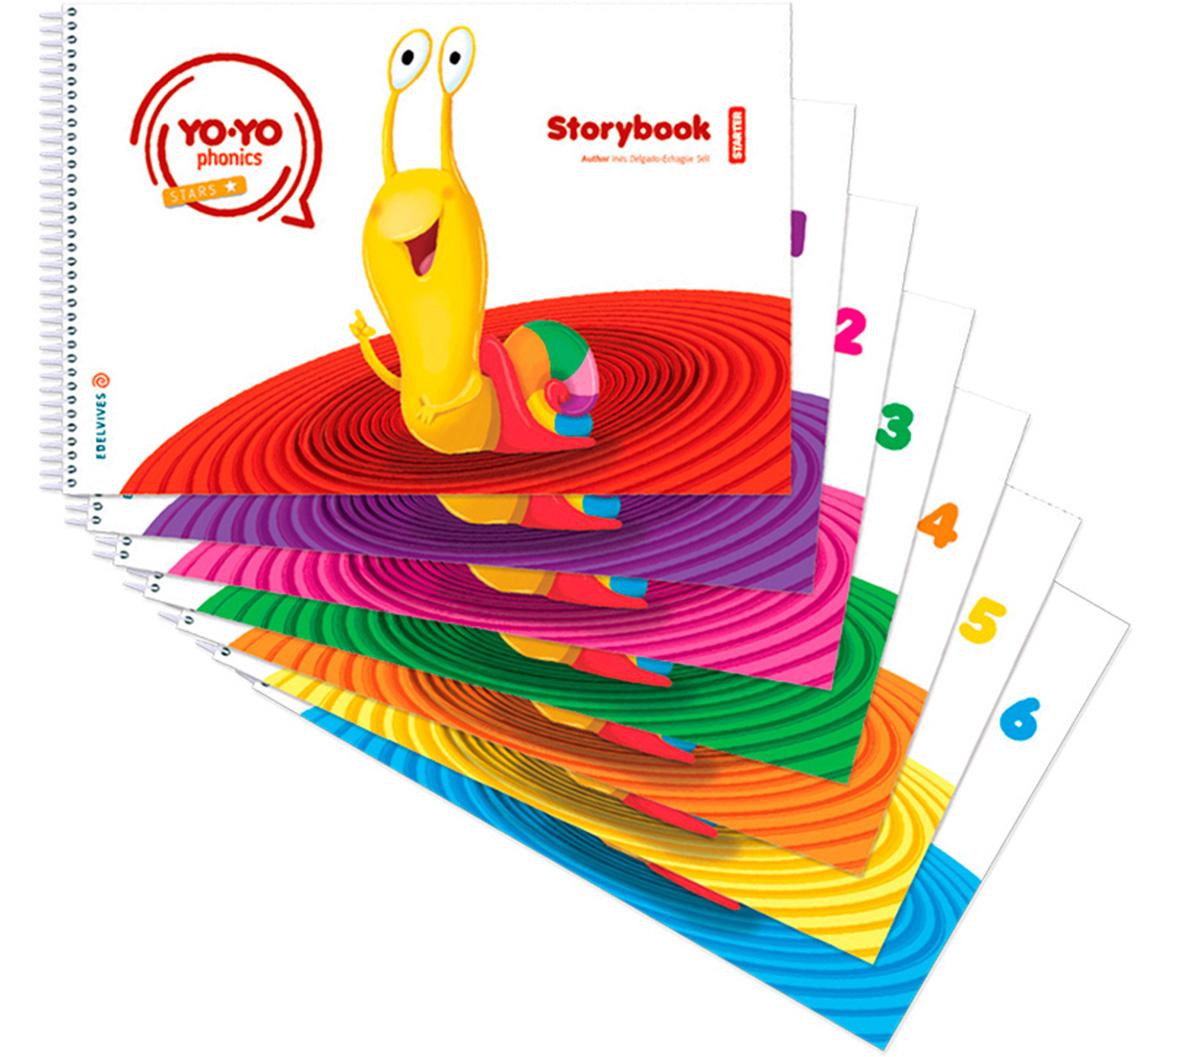 Yo-yo phonics. Material del alumnado. Storybooks